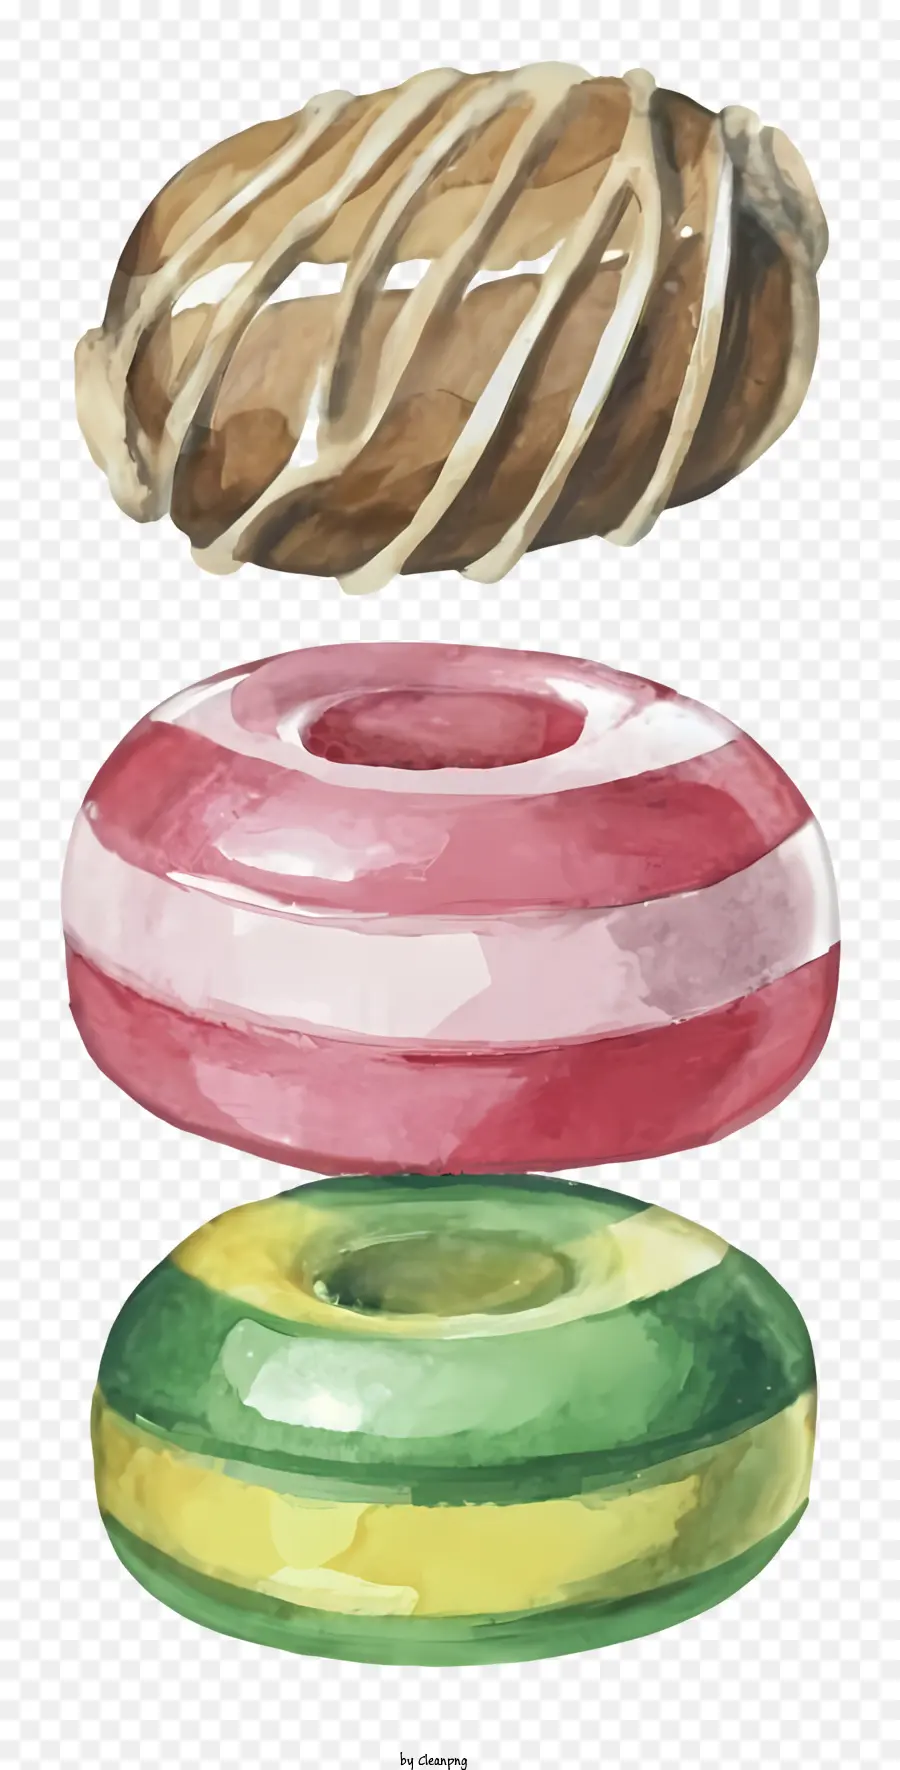 doughnuts chocolate doughnut cream-filled doughnut green doughnut yellow doughnut